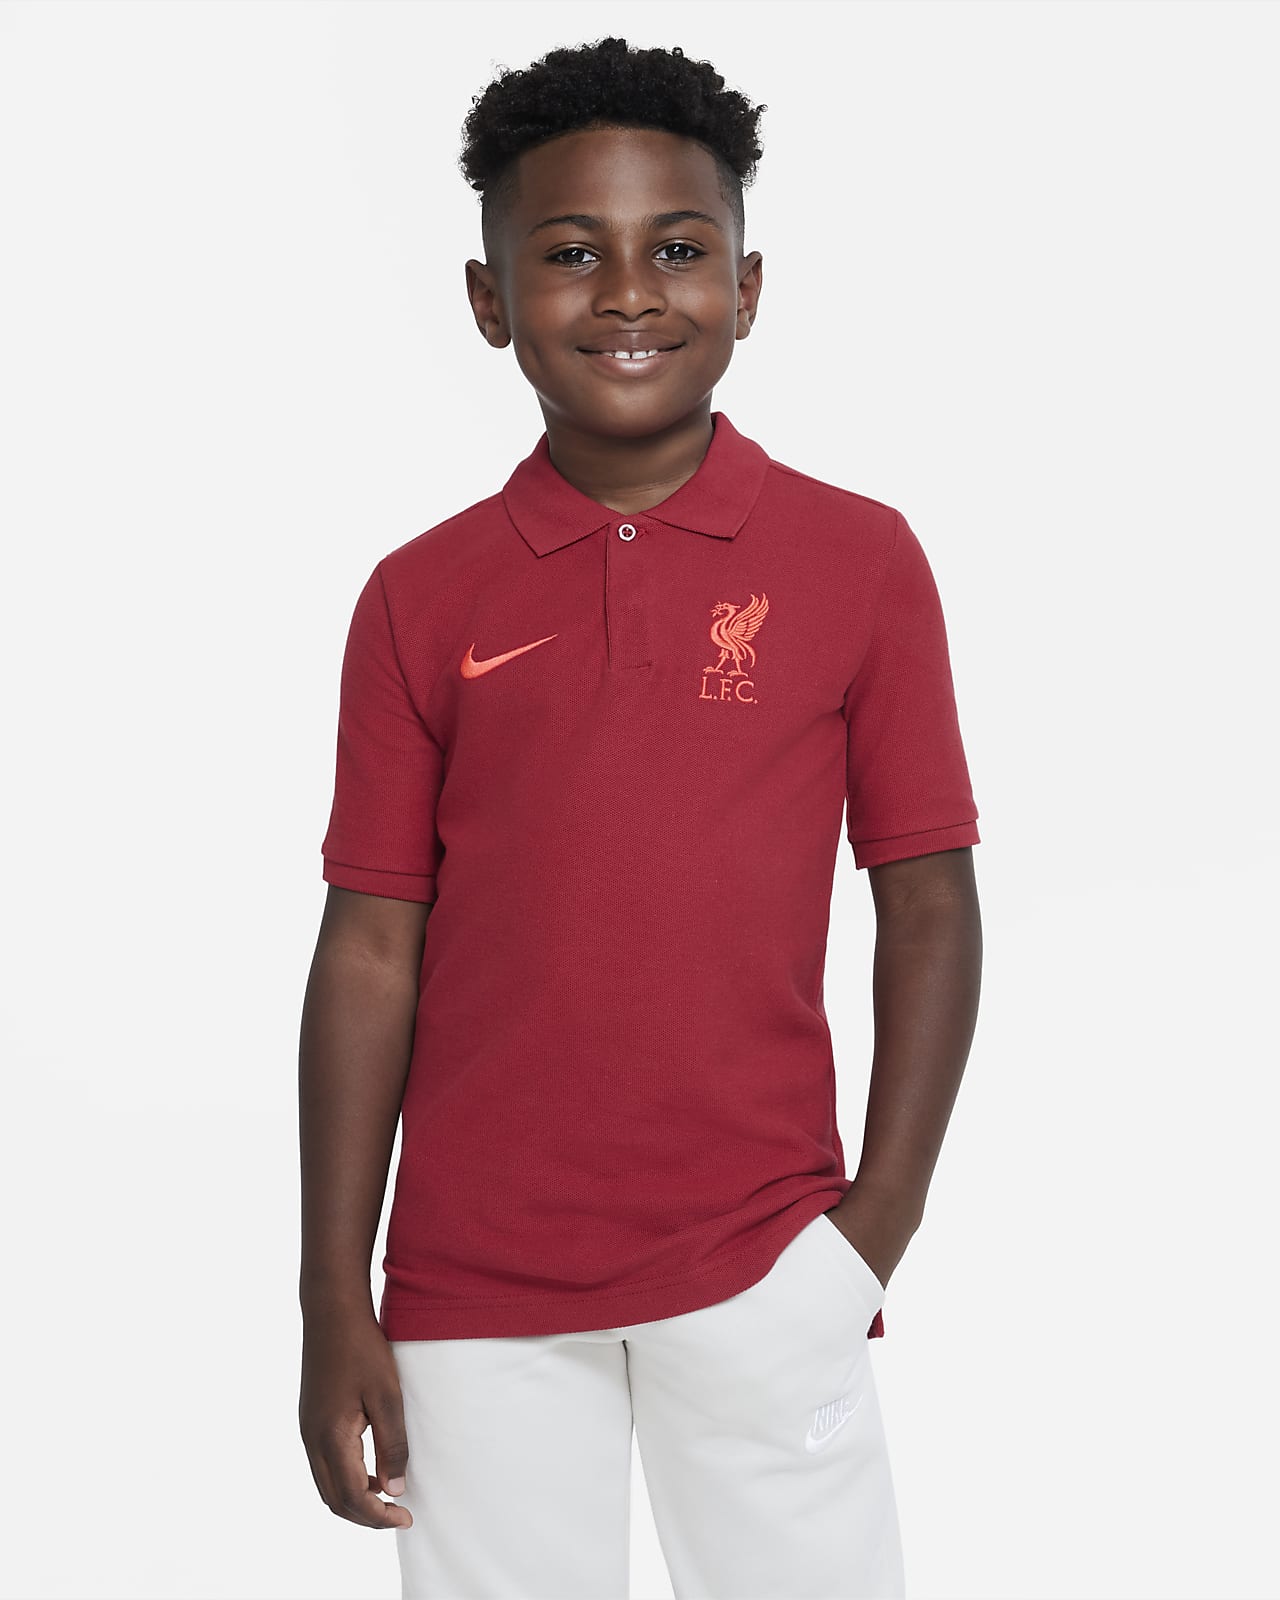 Liverpool F.C. Older Kids' Short-Sleeve Polo